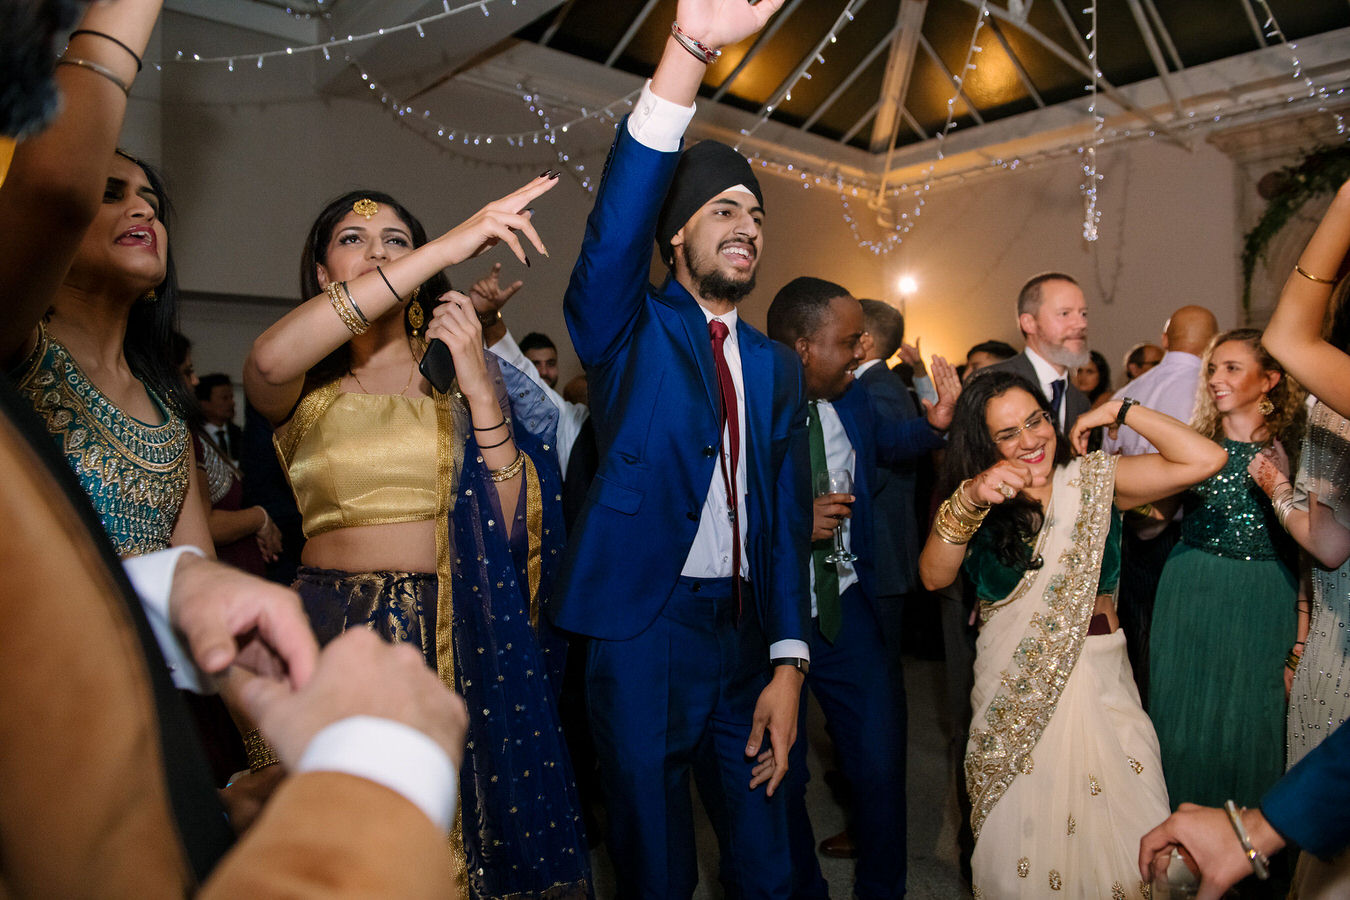 Hampton Court House wedding guests feeling great on the dance floor